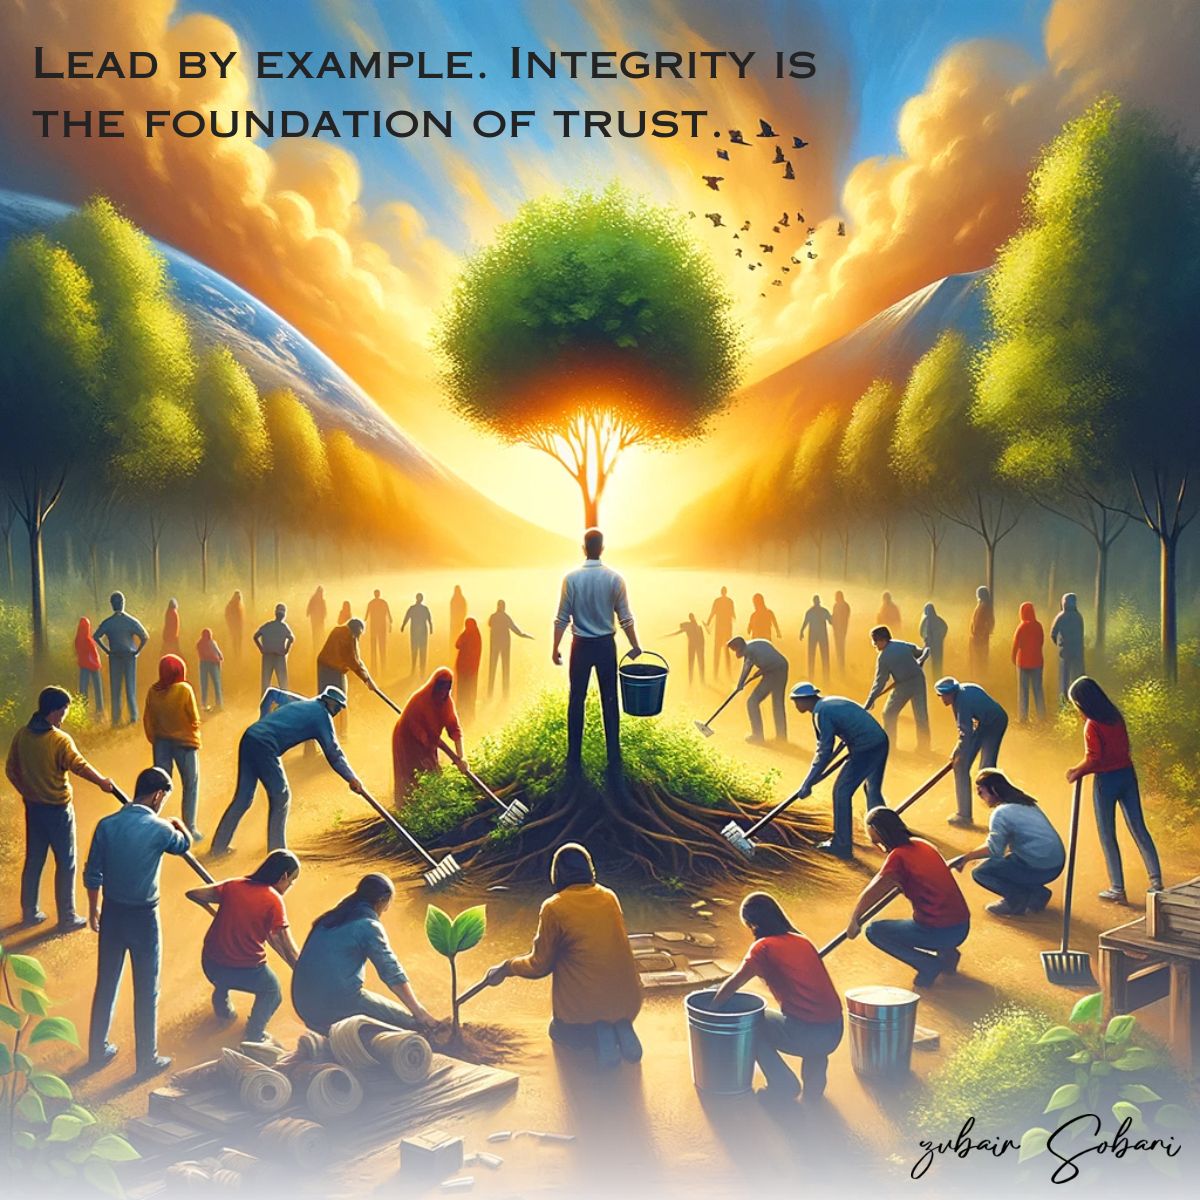 Lead by example. Integrity is the foundation of trust. 
#LeadByExample #IntegrityIsTrust #FoundationOfTrust #ZubairSobani #Thinkventures #Thinkdirect #Canada #USA #KSA #UAE #Pakistan